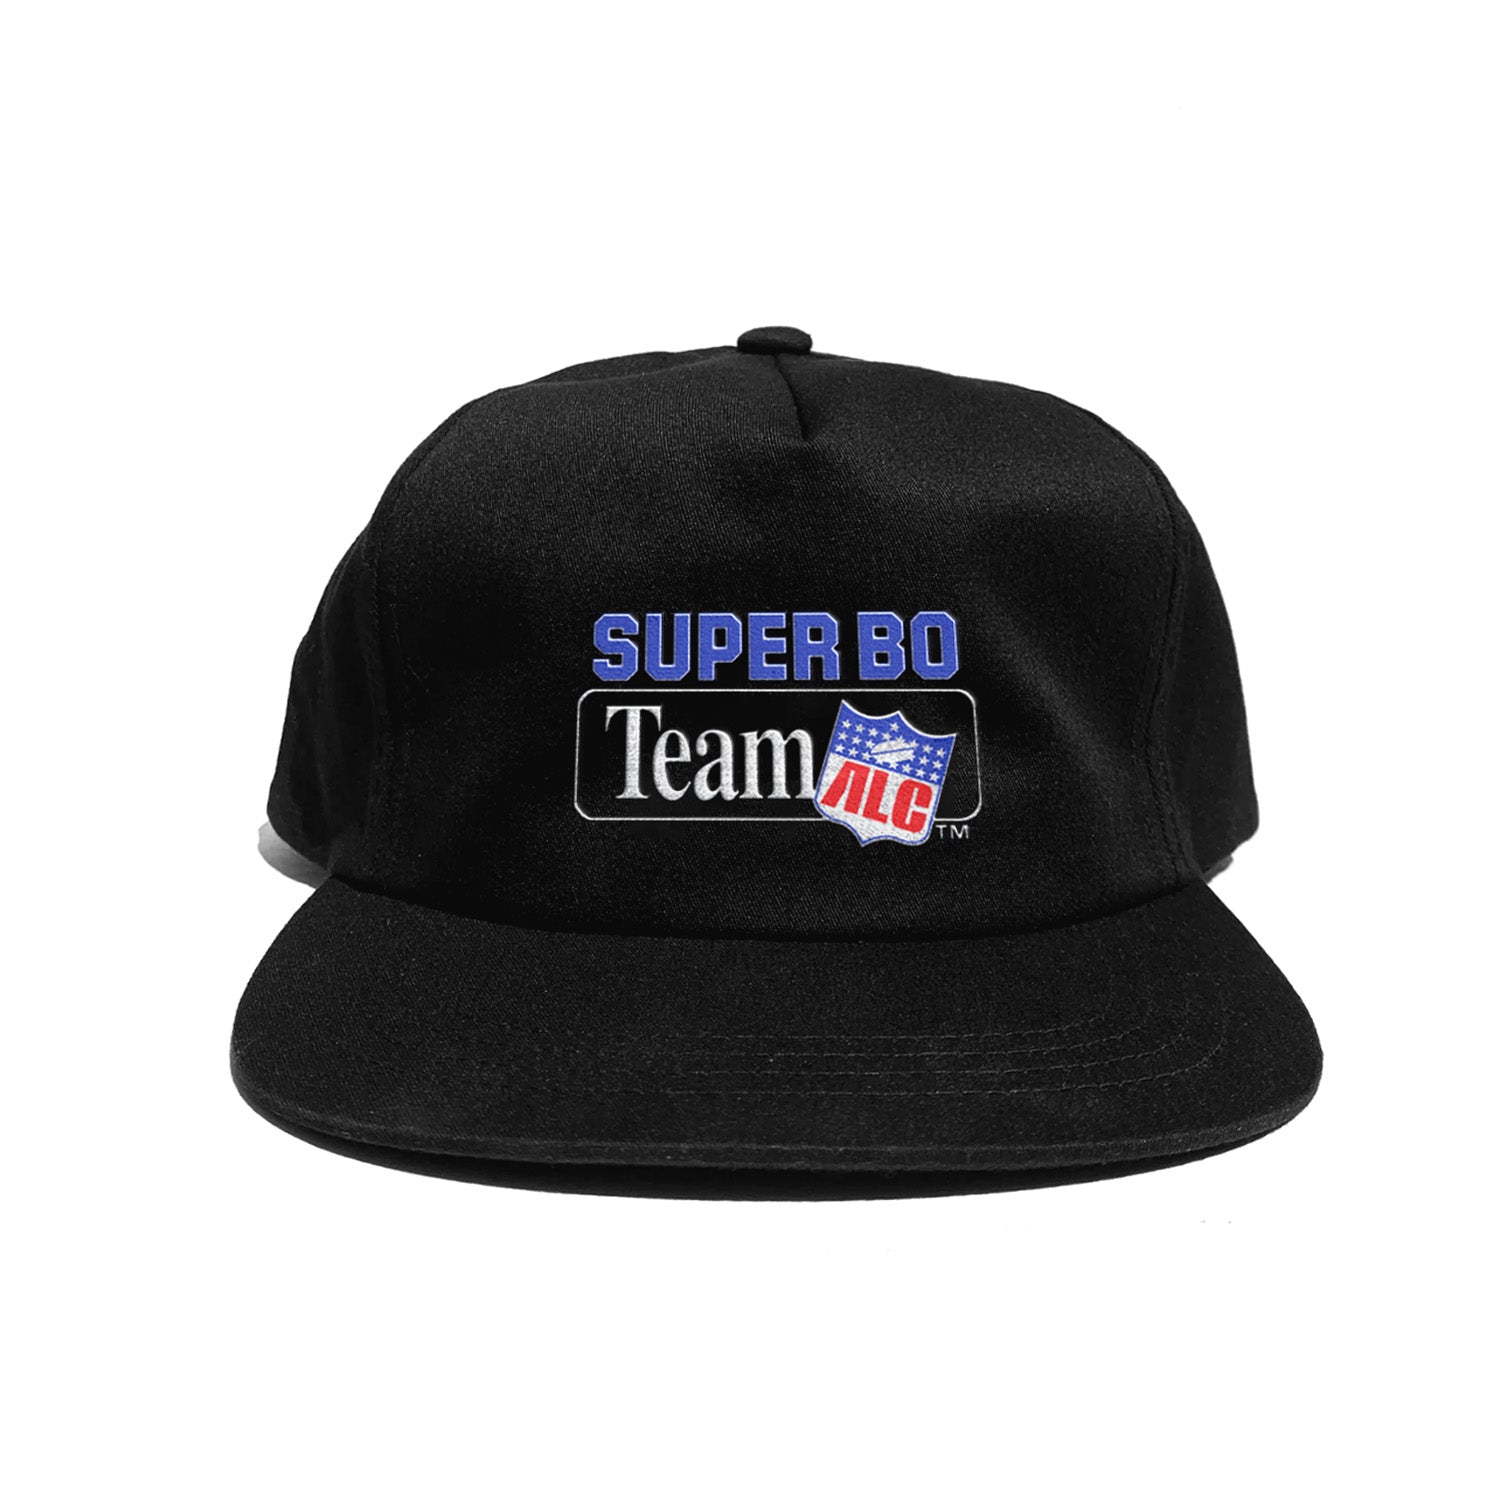 Team ALC (Black Snapback Hat)